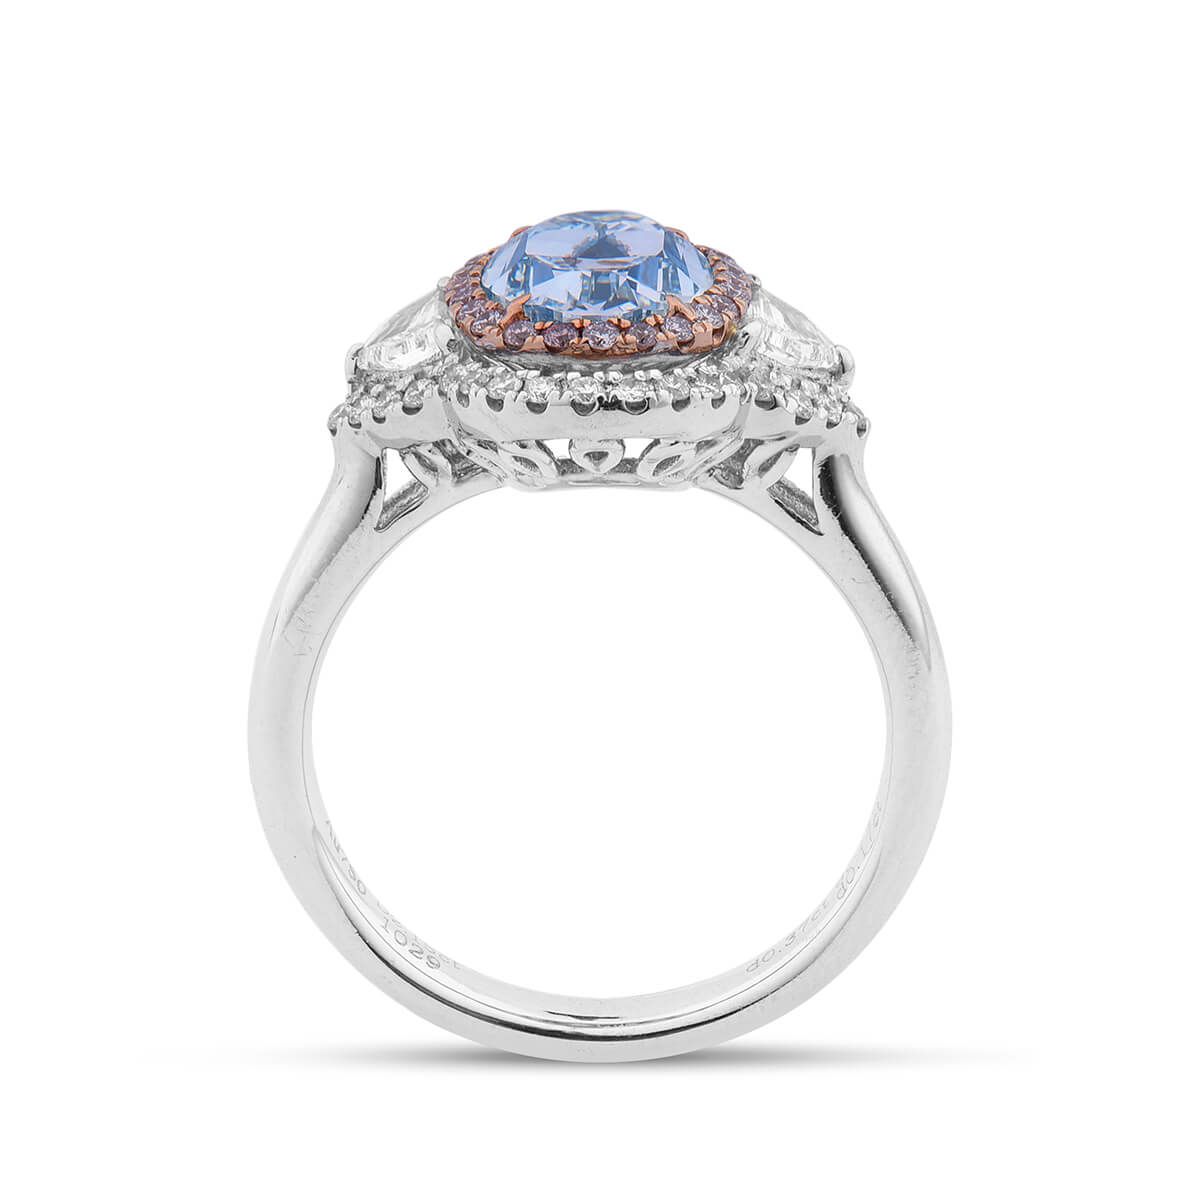 Fancy Greenish Blue Diamond Ring, 2.83 Ct. TW, Oval shape, GIA Certified, 6175841029